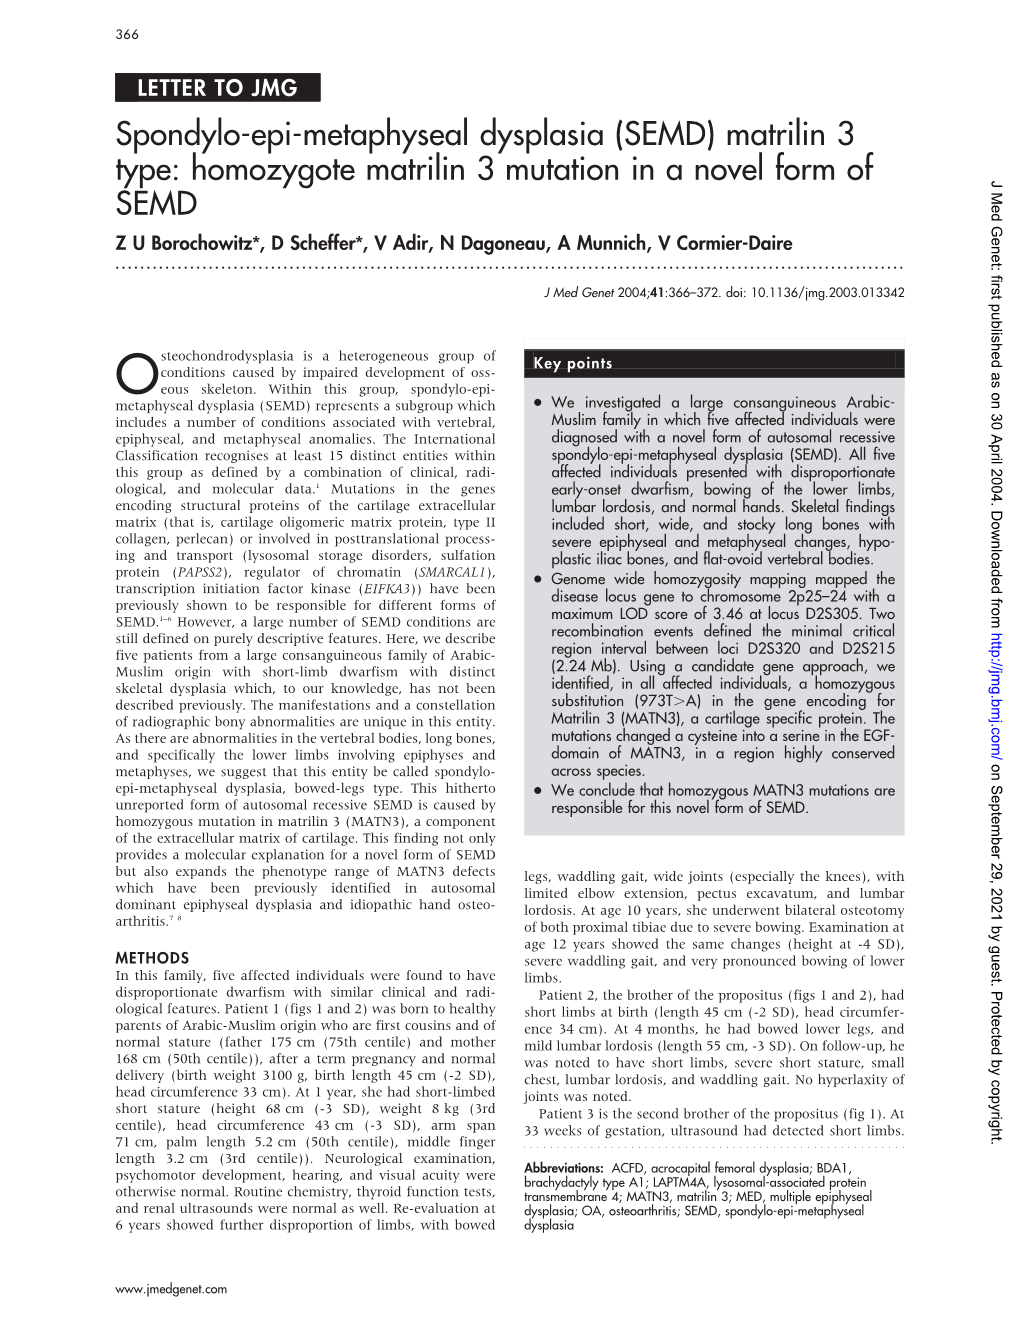 Spondylo-Epi-Metaphyseal Dysplasia (SEMD) Matrilin 3 Type